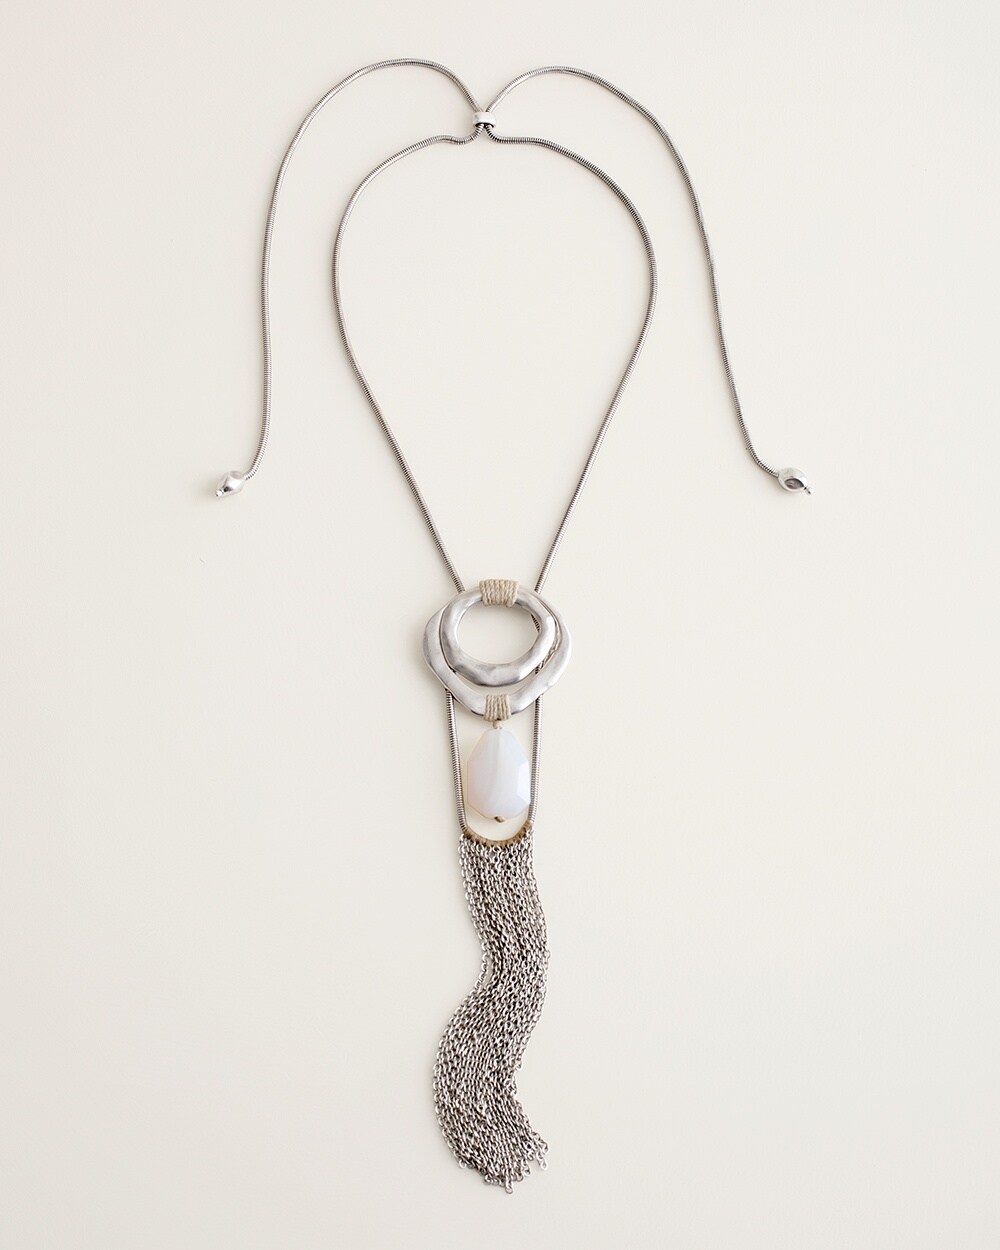 Threaded Silver-Tone Pendant Necklace